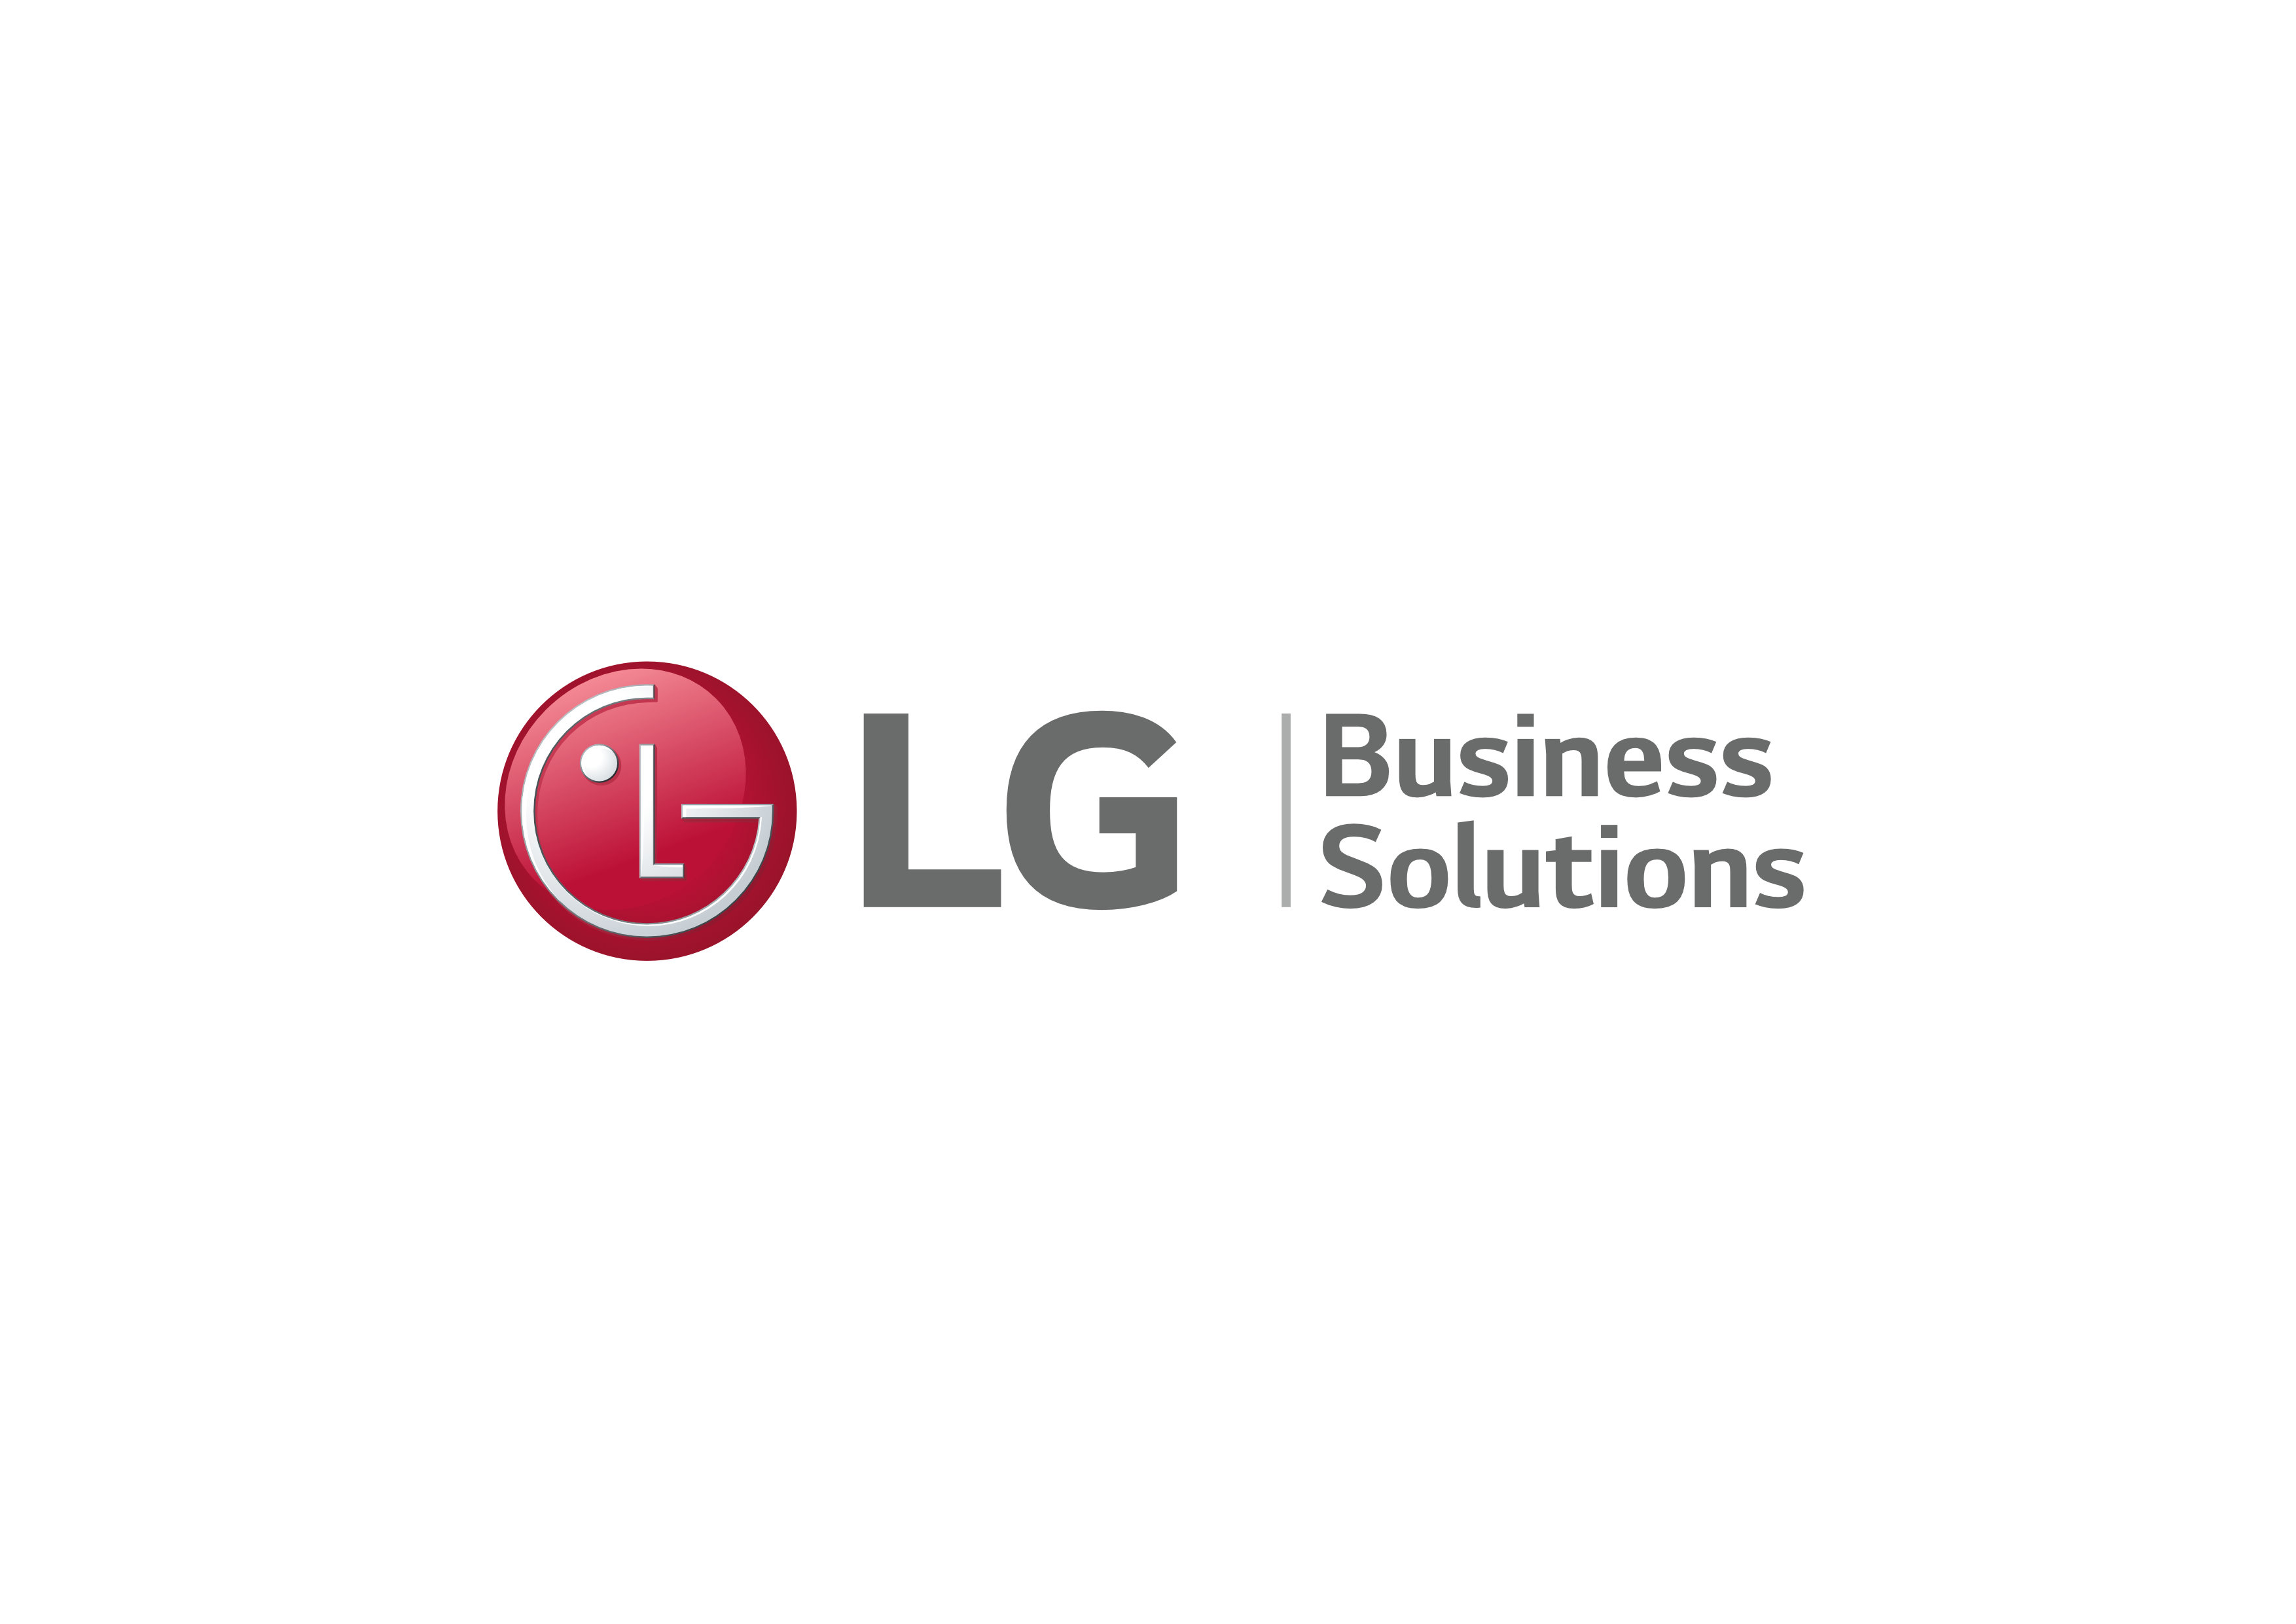 LG_Business_Solutions_logo.jpg